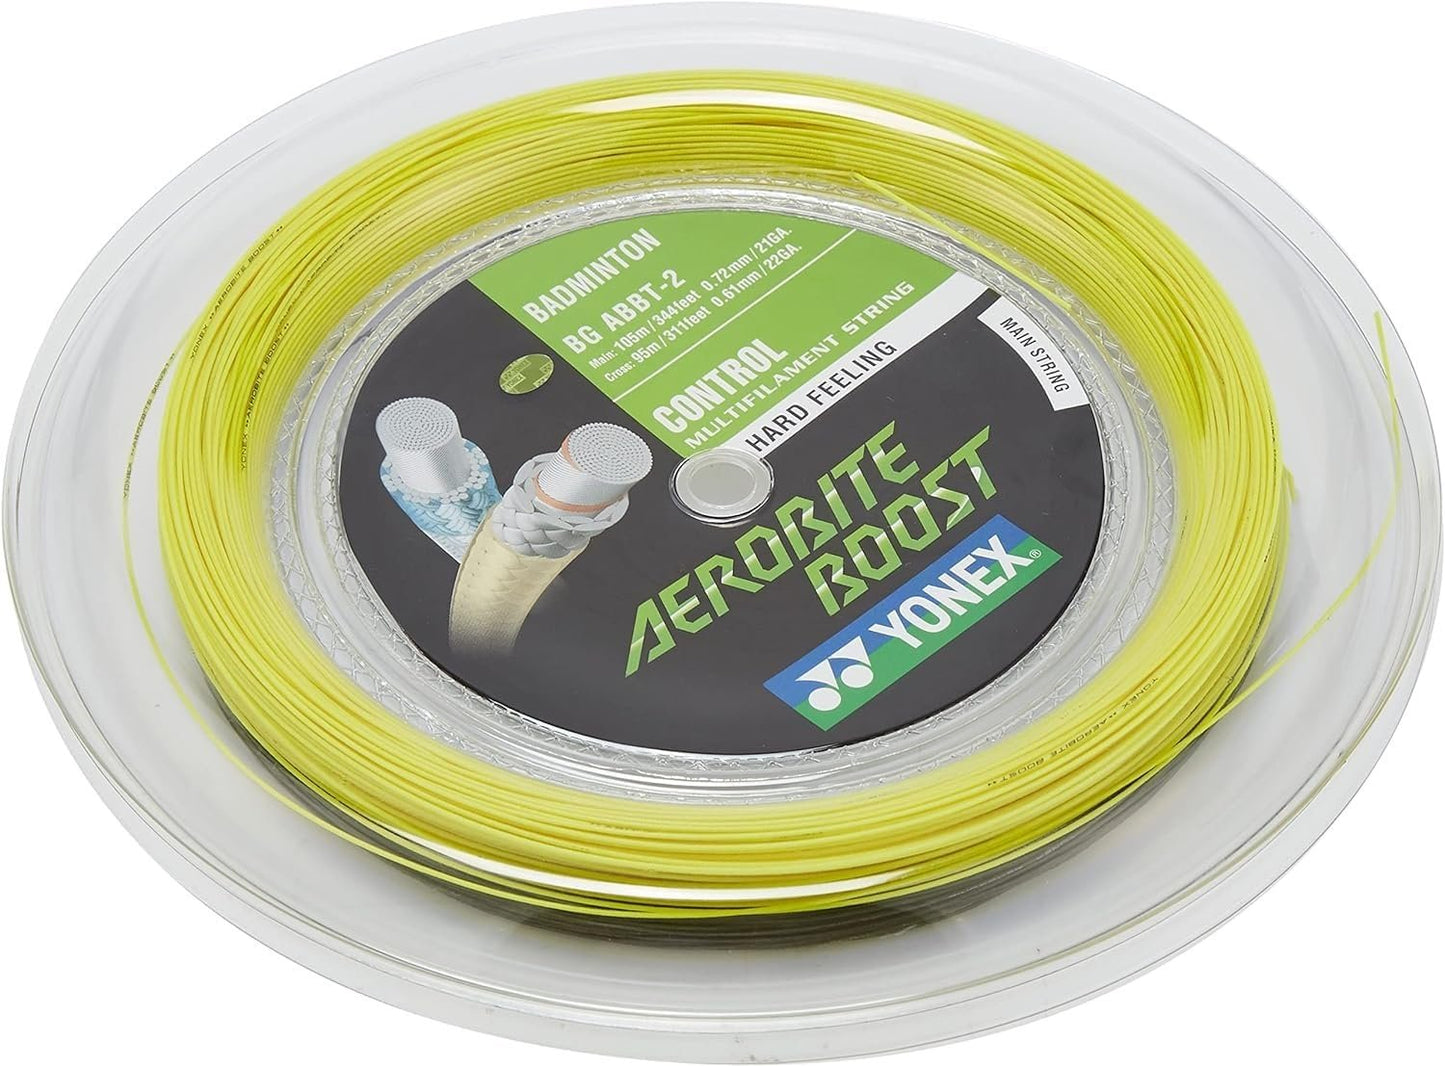 Yonex Aerobite Boost Badminton String, Reel (Color Option)